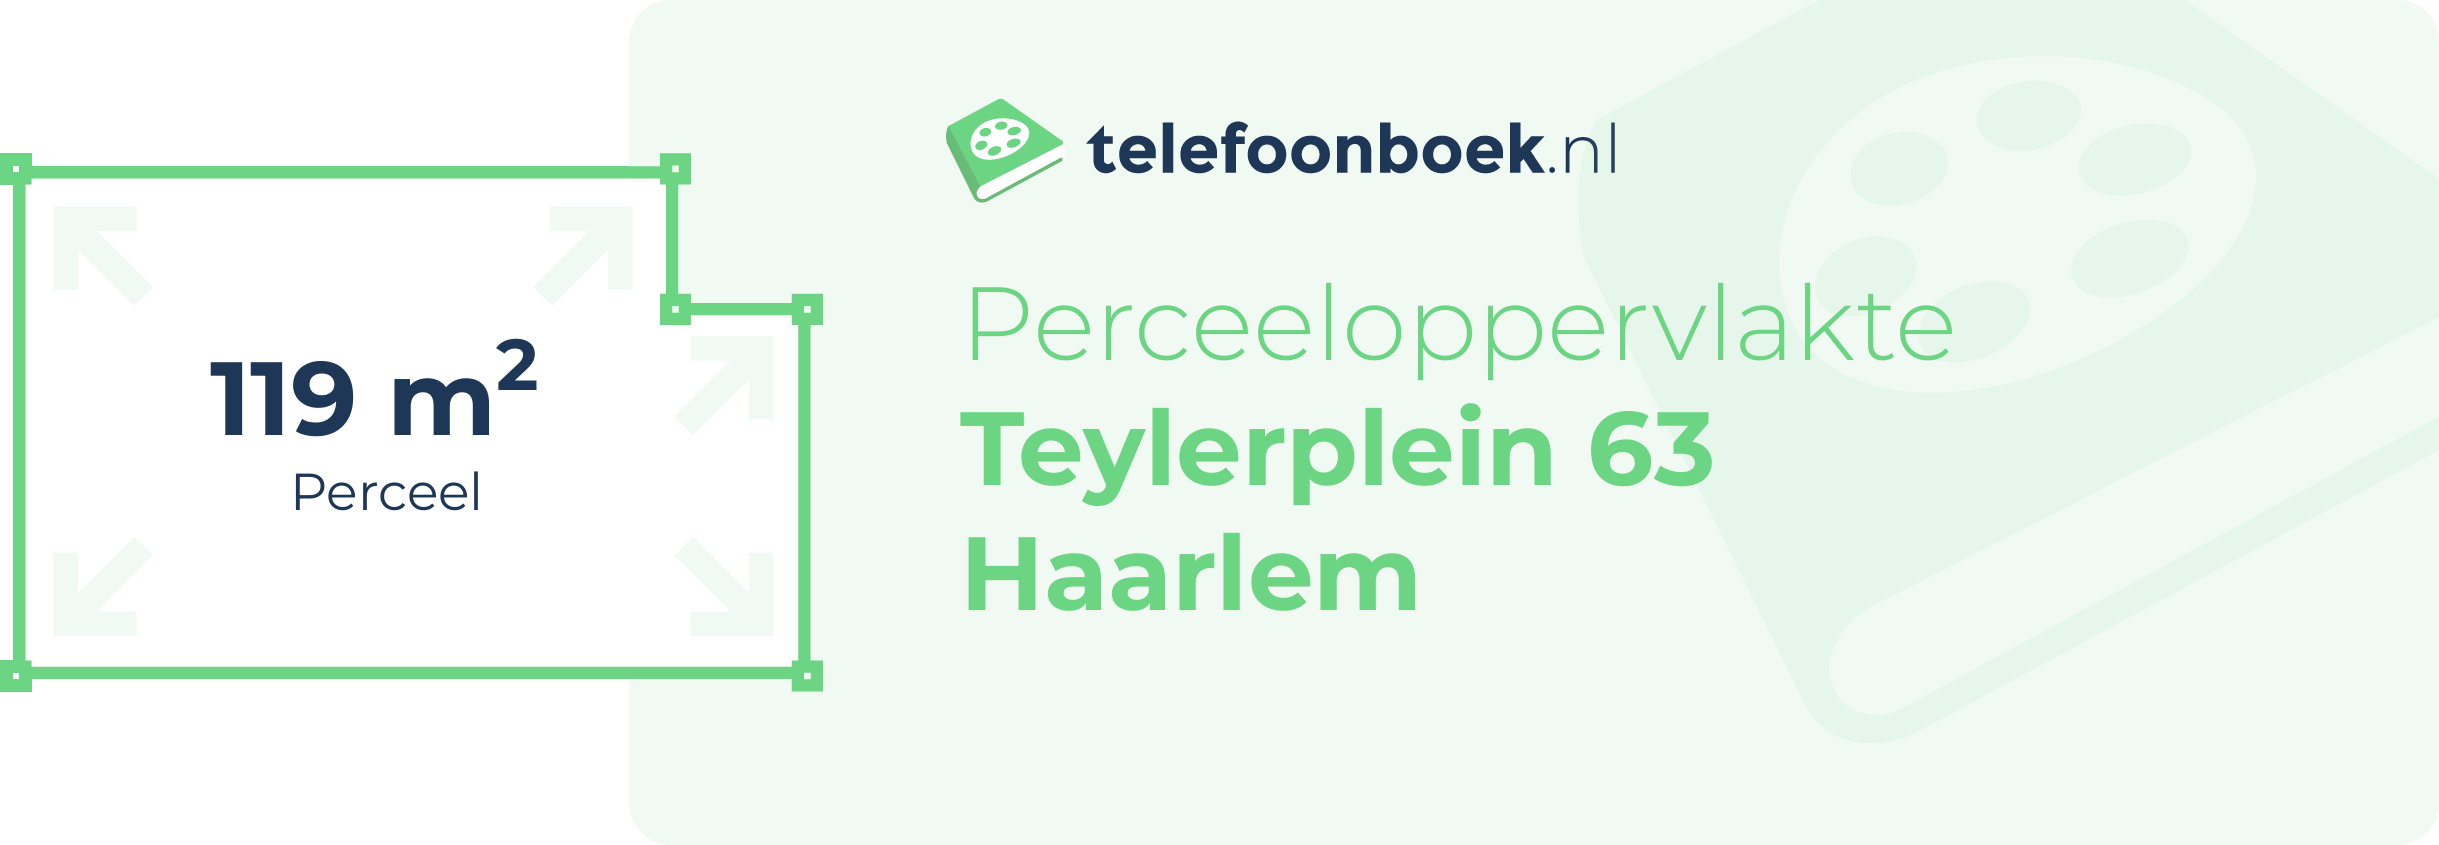 Perceeloppervlakte Teylerplein 63 Haarlem